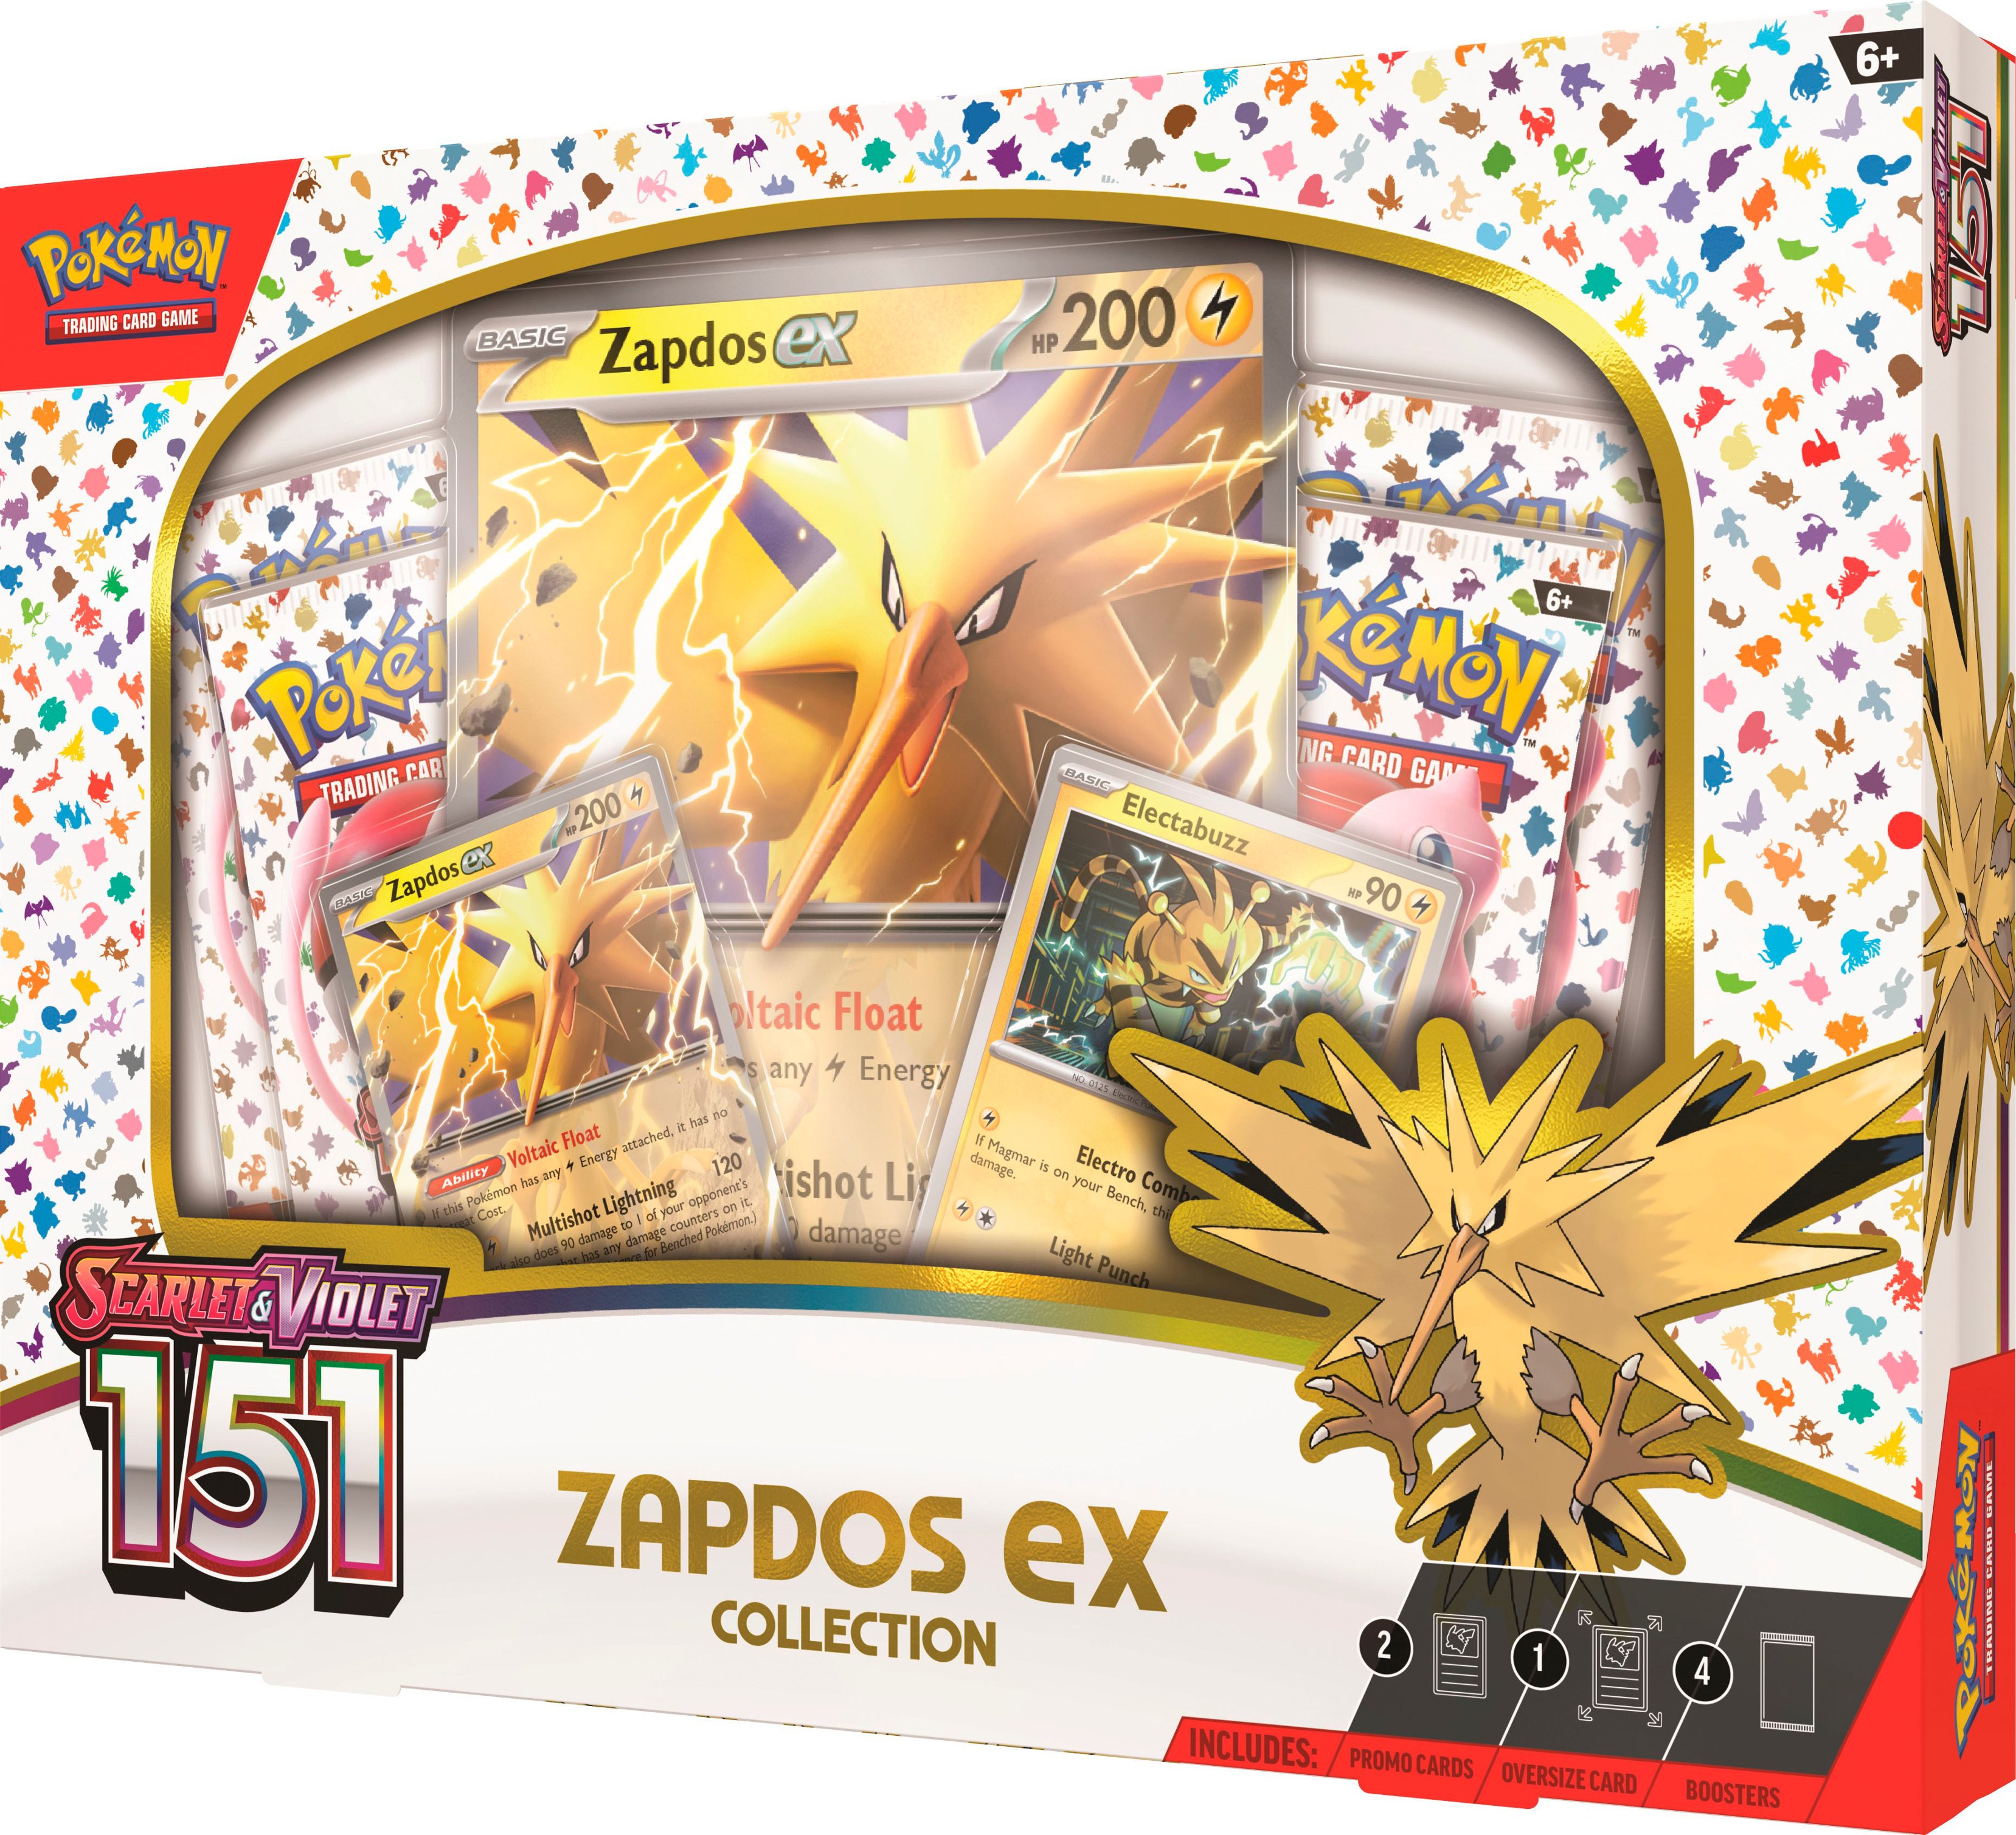 Pokémon 151 UPC is finally here! Ultra Premium Collection Zapdos